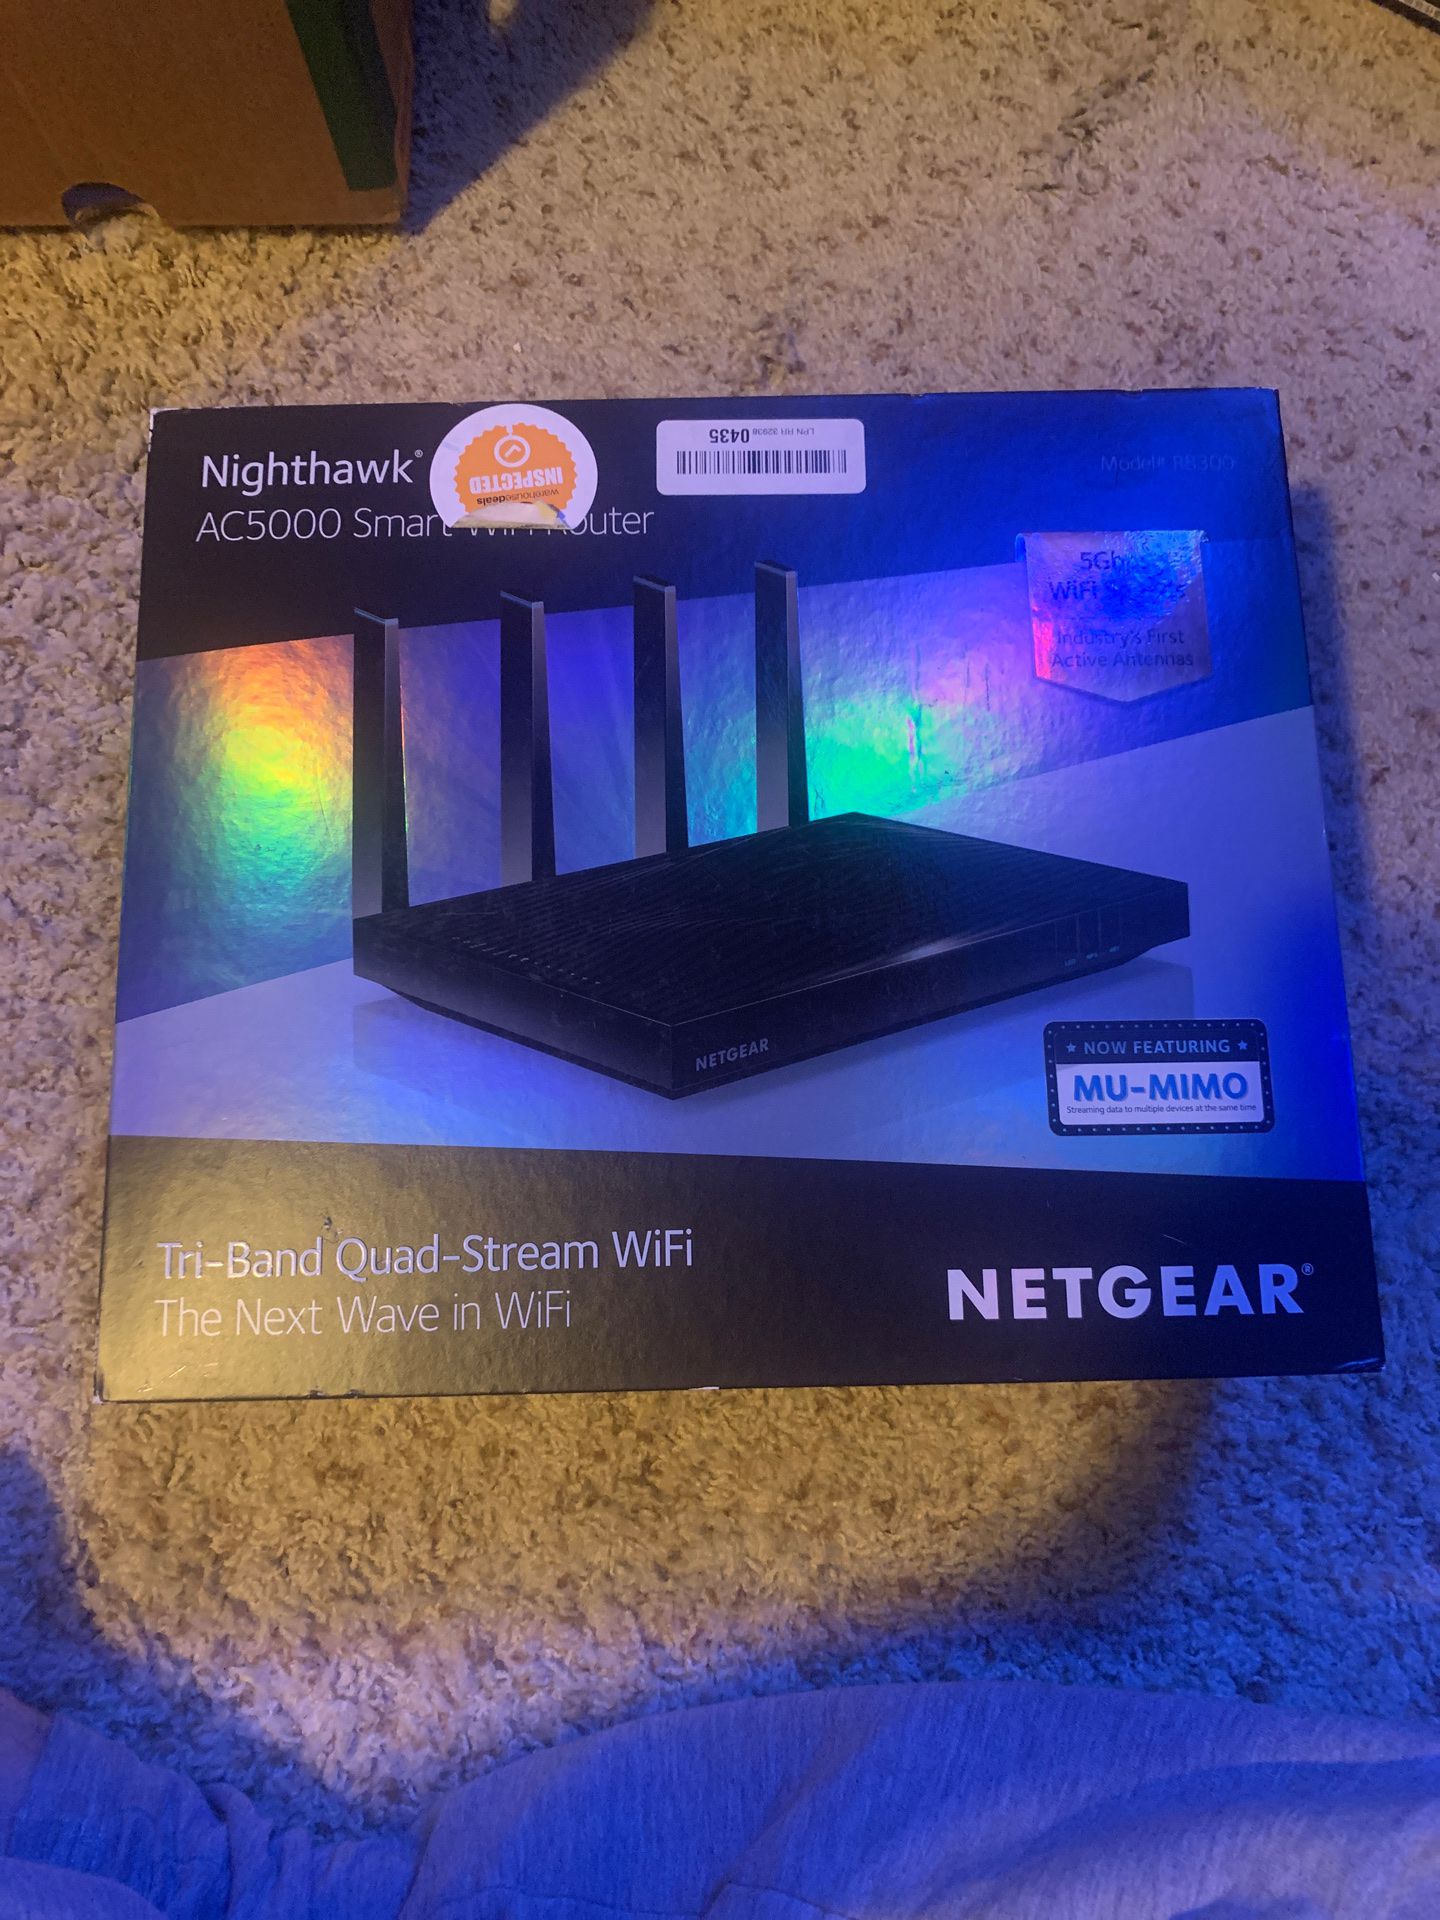 Nighthawk AC5000 router $80